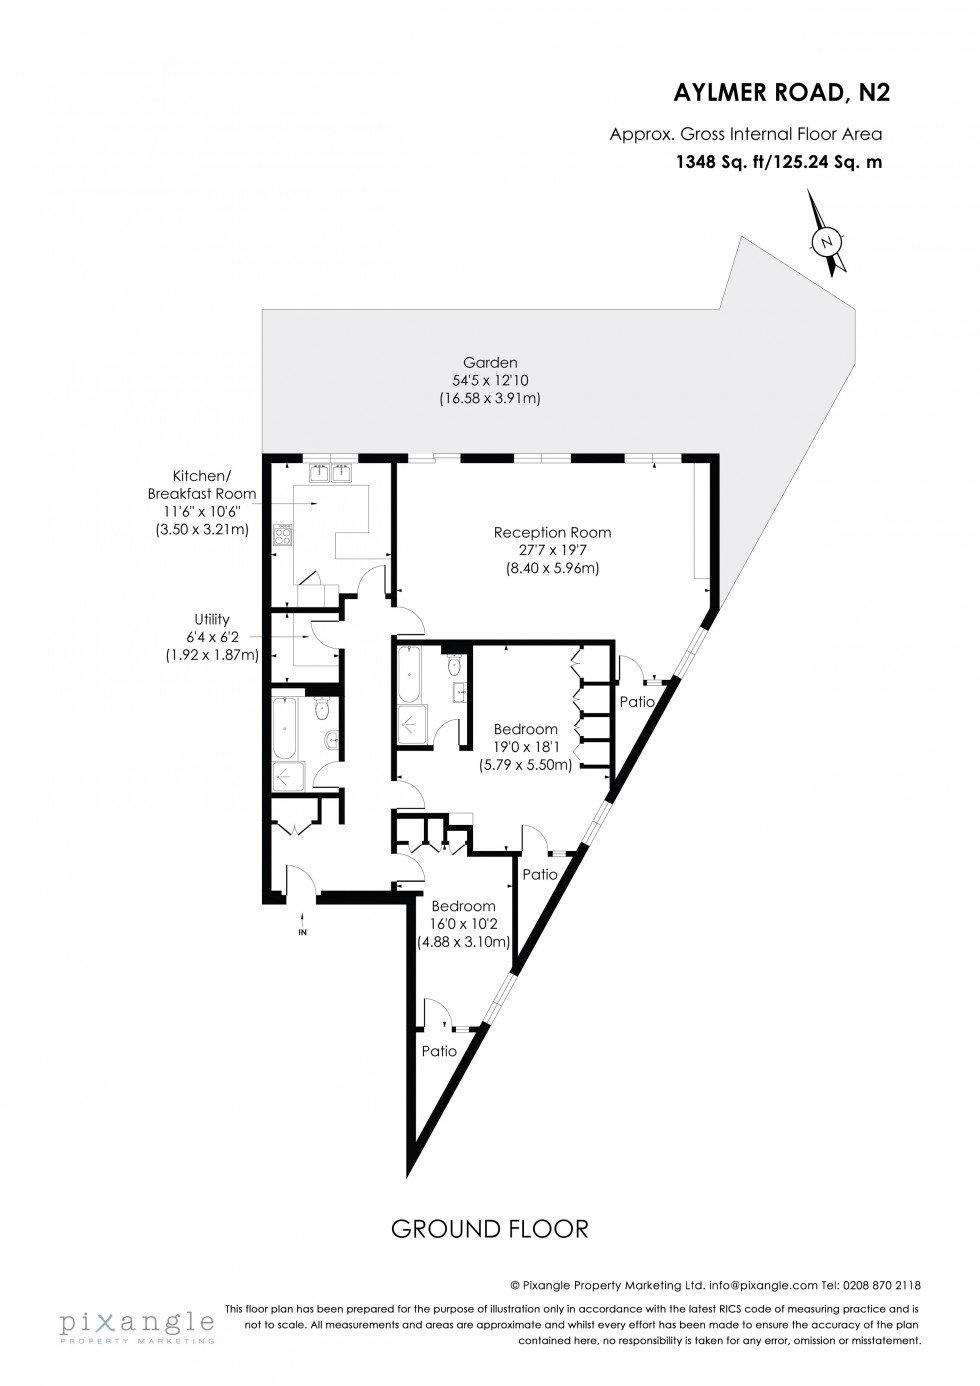 Floorplan for Aylmer Place, Hampstead Garden Suburb borders